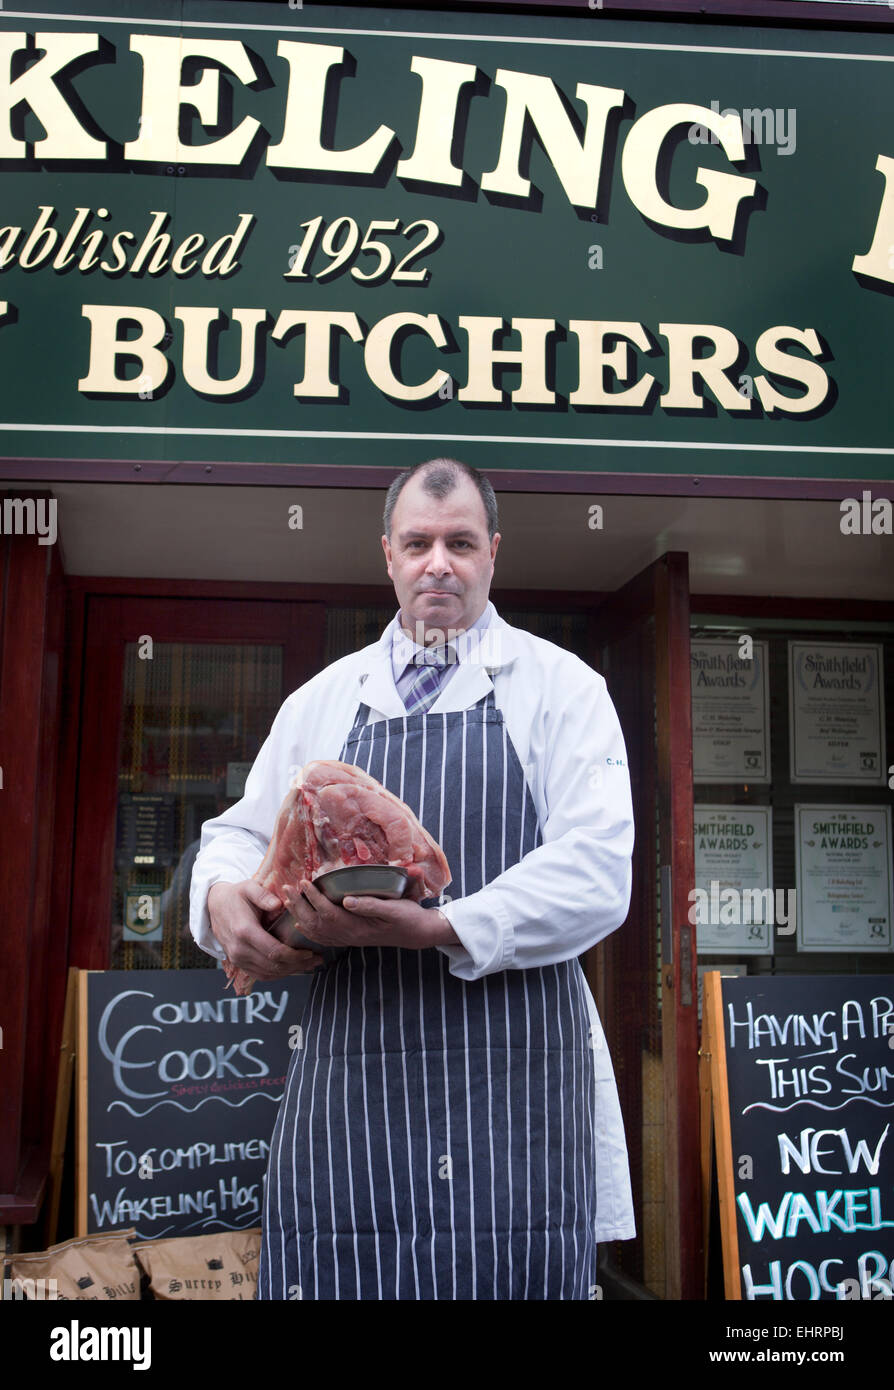 Mark Holt at C H Wakeling Family Butcher in Godalming Surrey England UK Stock Photo